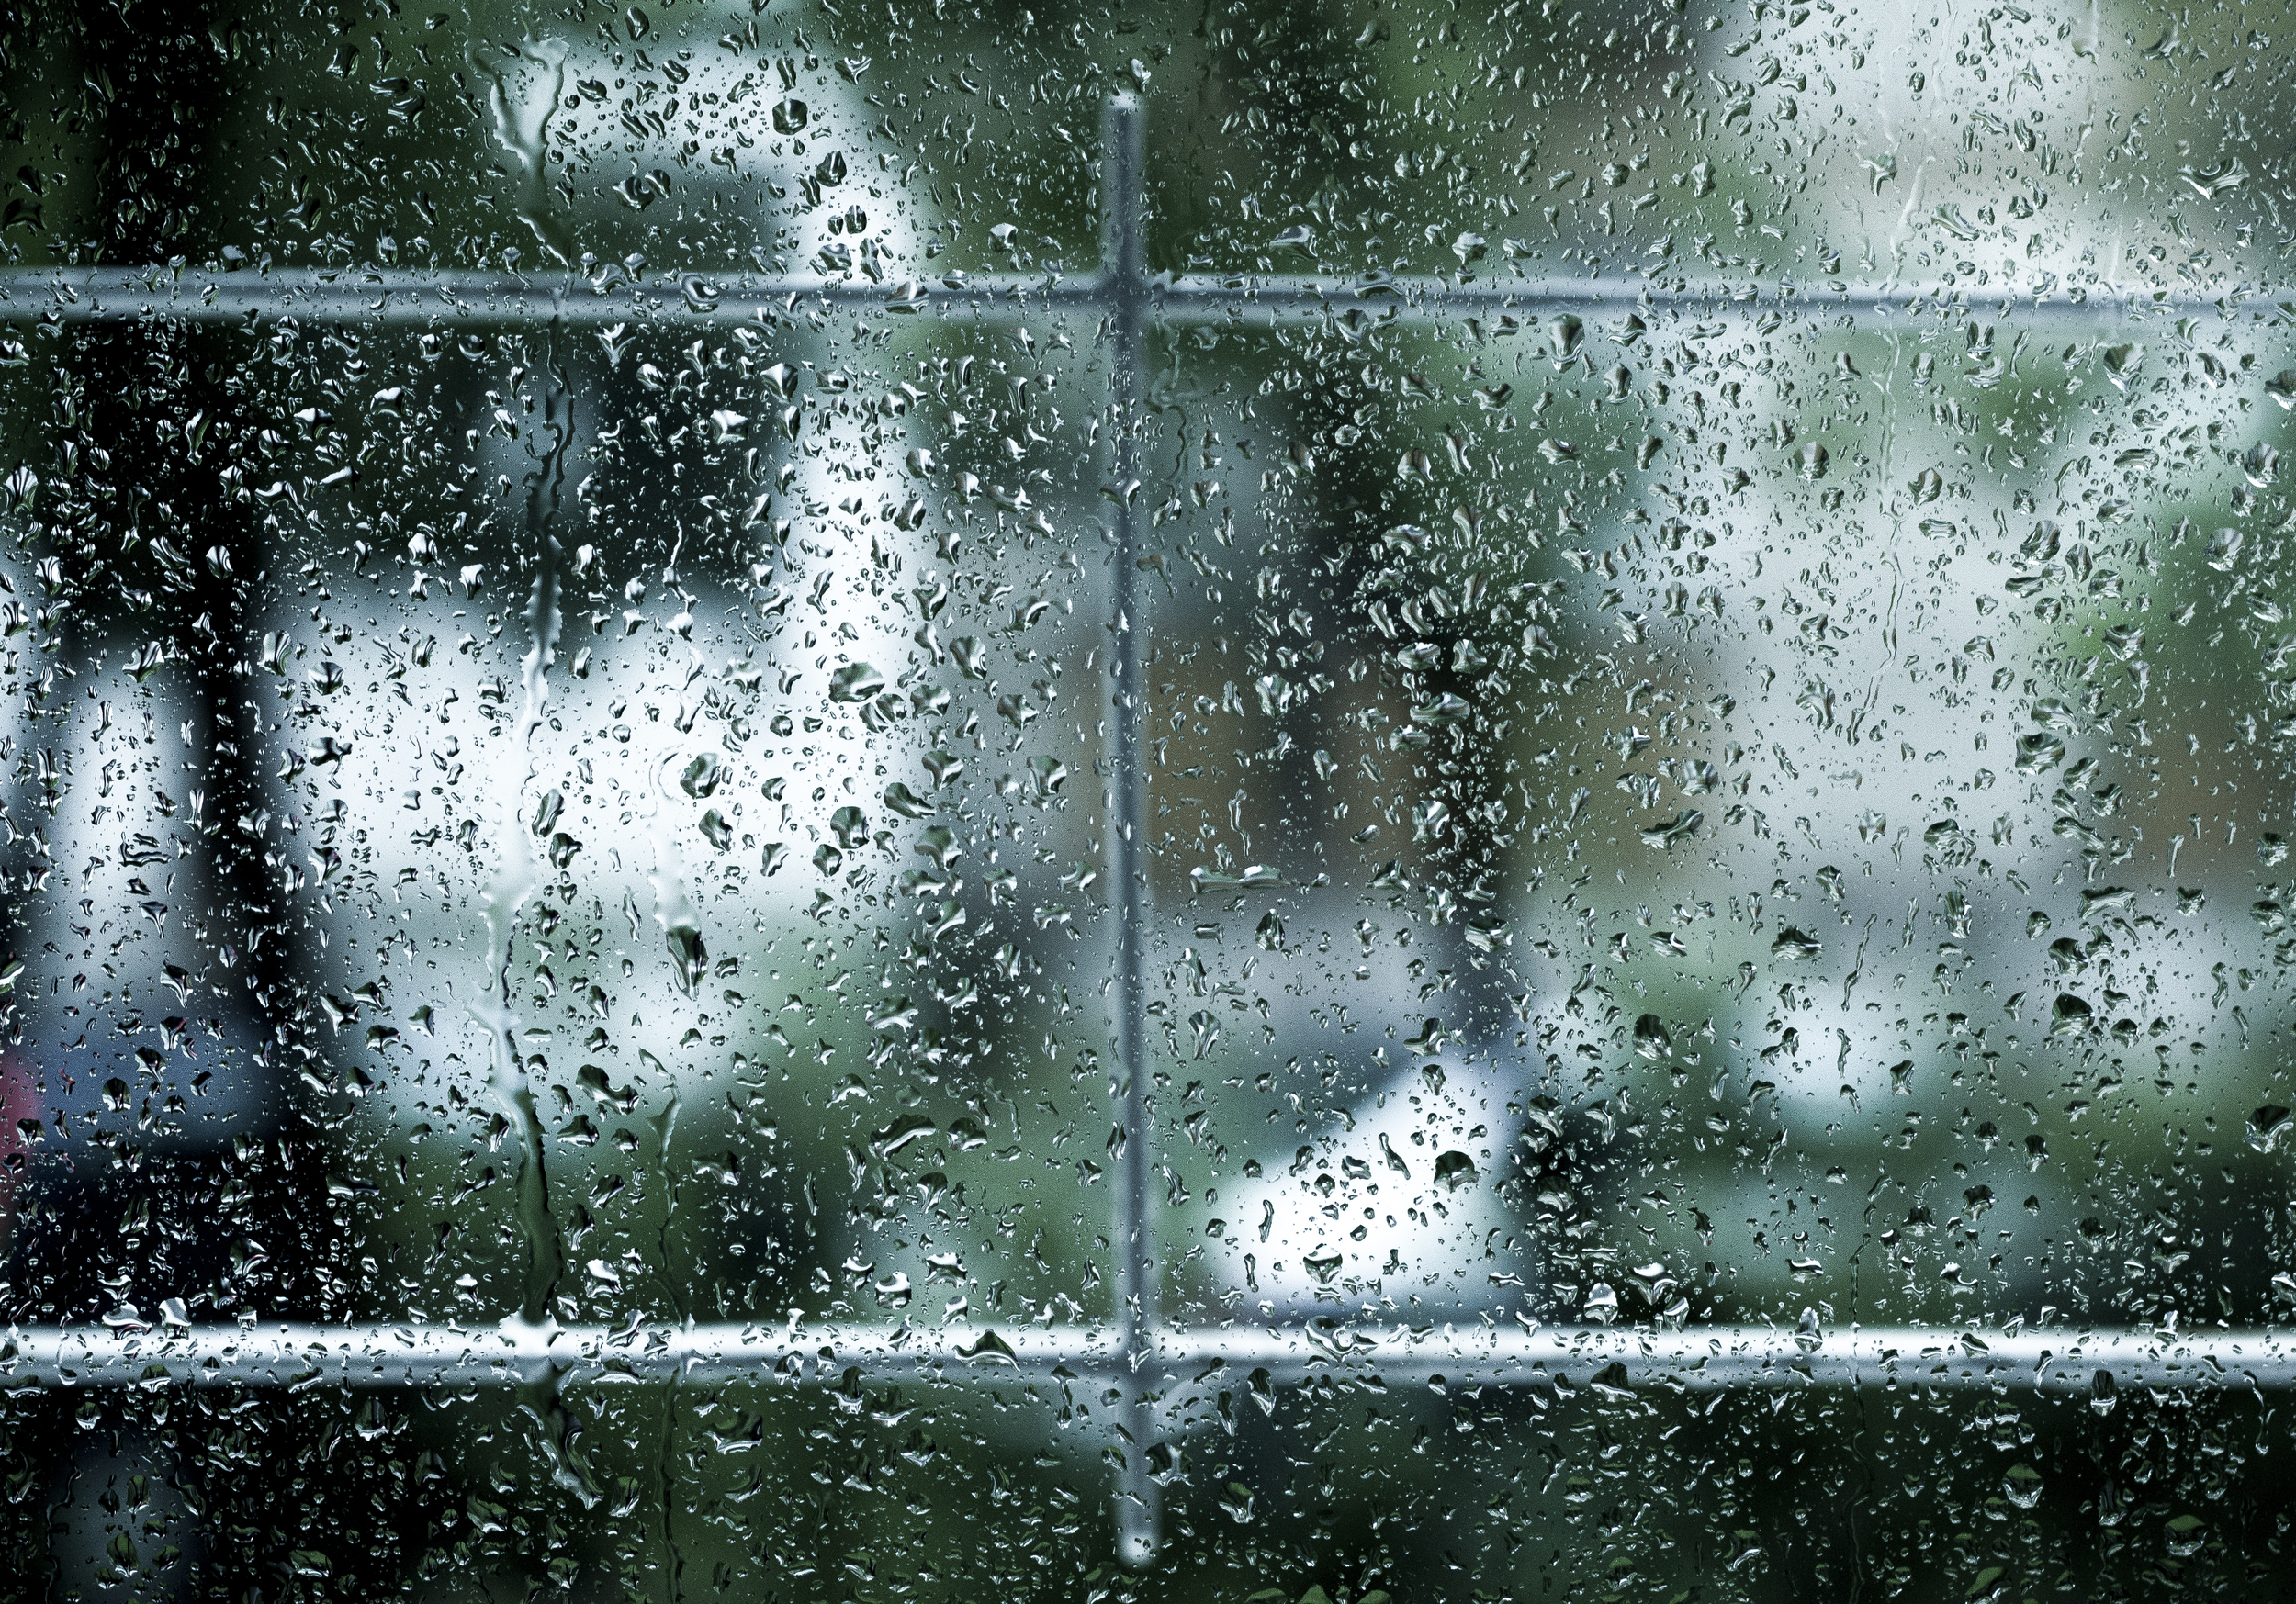 Ilgiz за окном дождь. Дождь за окном. Дождь в окне. Капли дождя на окне. Окно с каплями дождя.